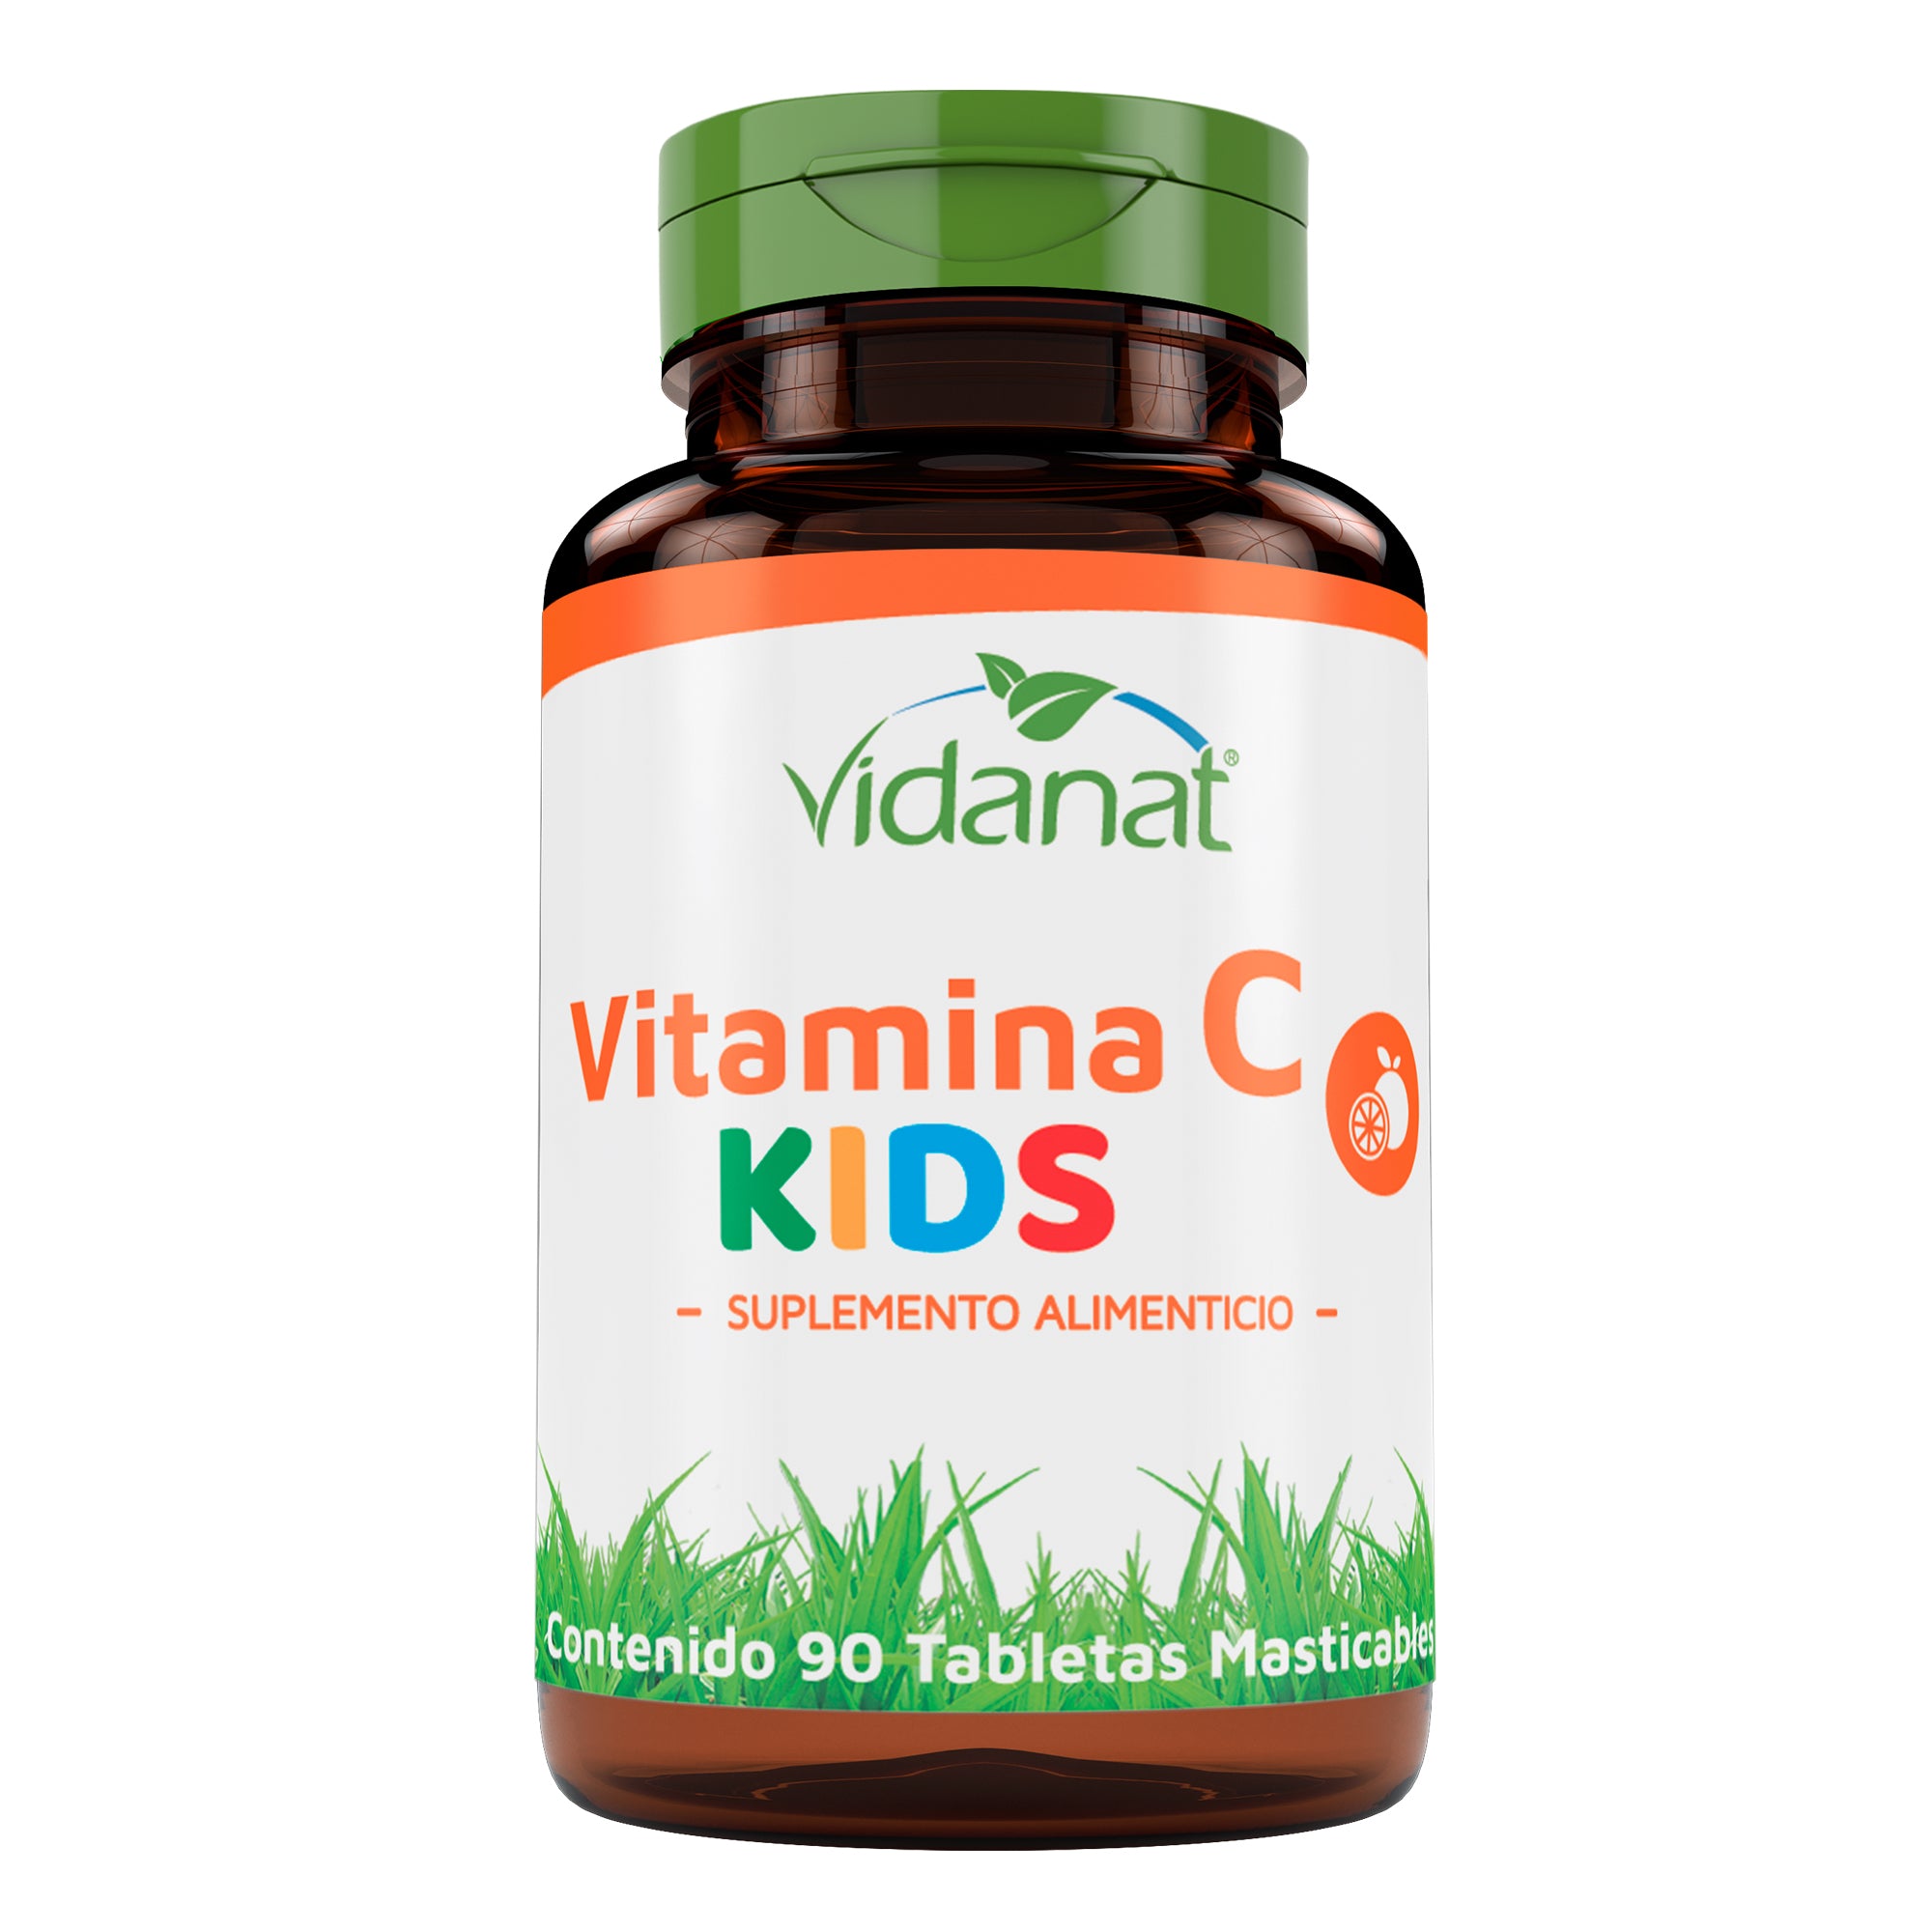 Vitamina c kids 90 tab masticables